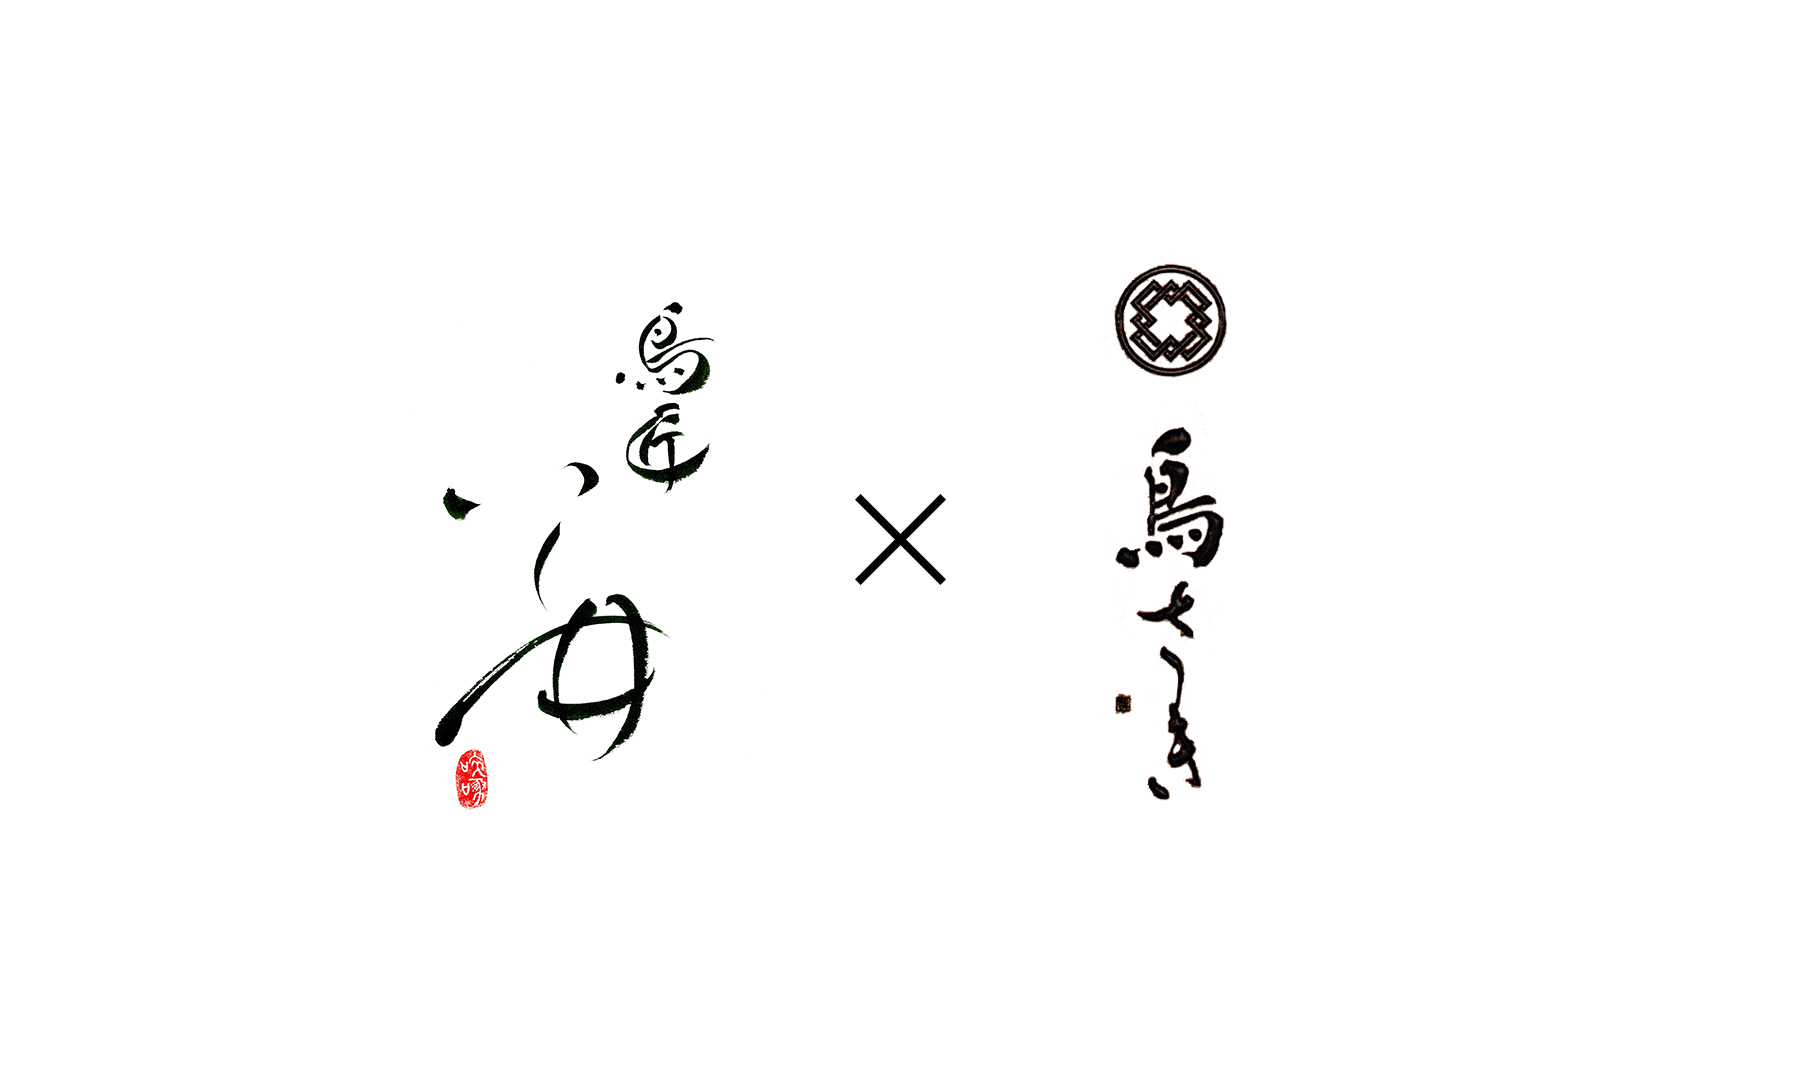 Torisaki × Torisyo Ishii Takeaway's image